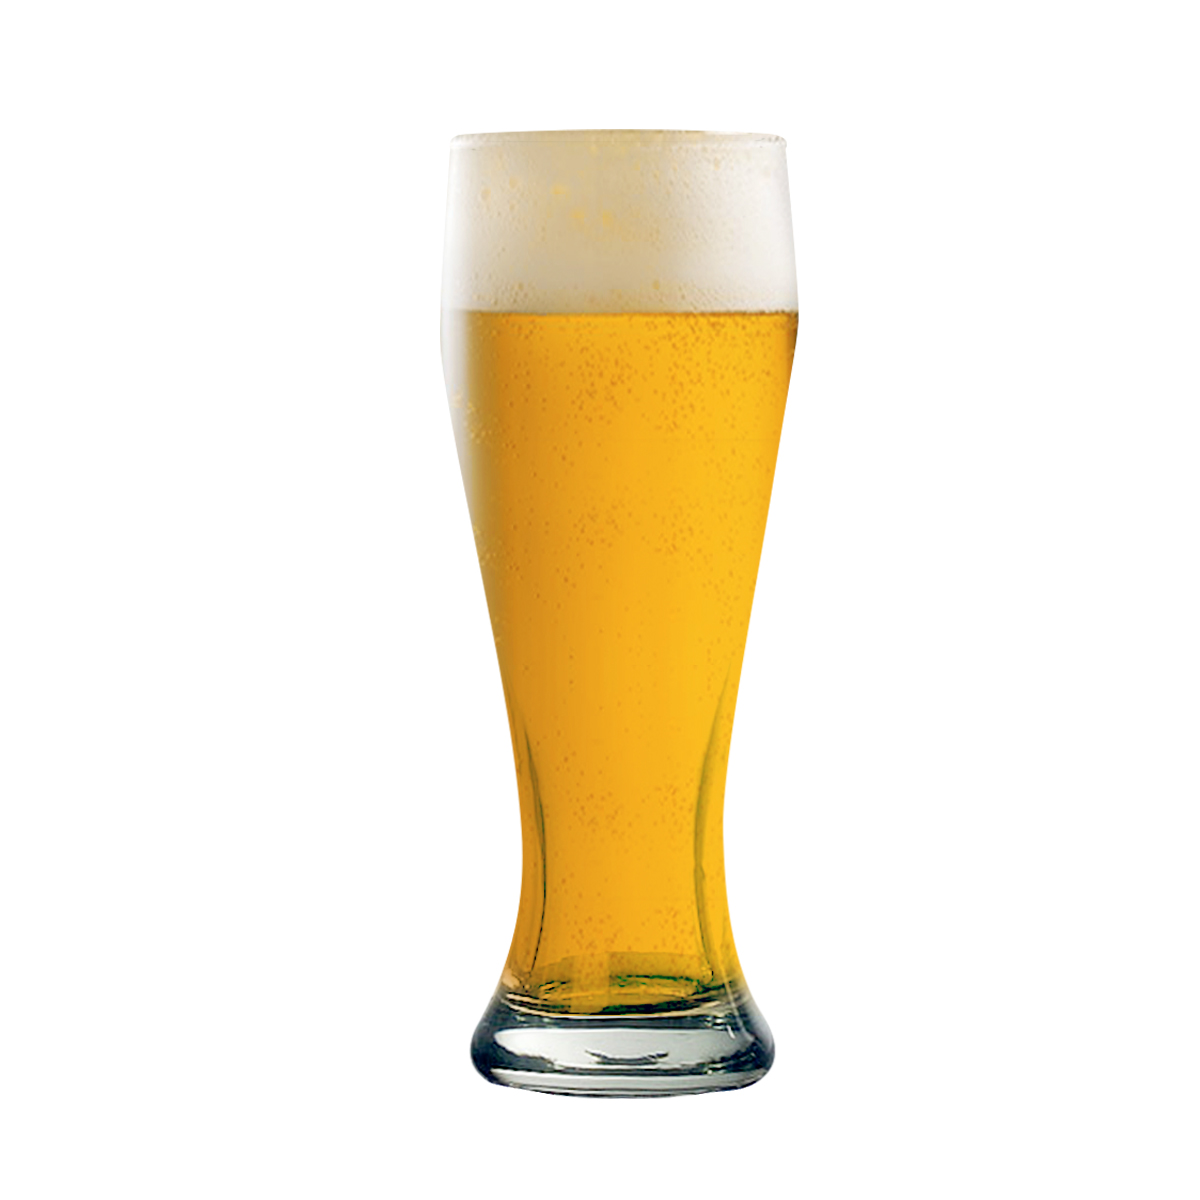 Slender Hourglass Shaped Beer Glass